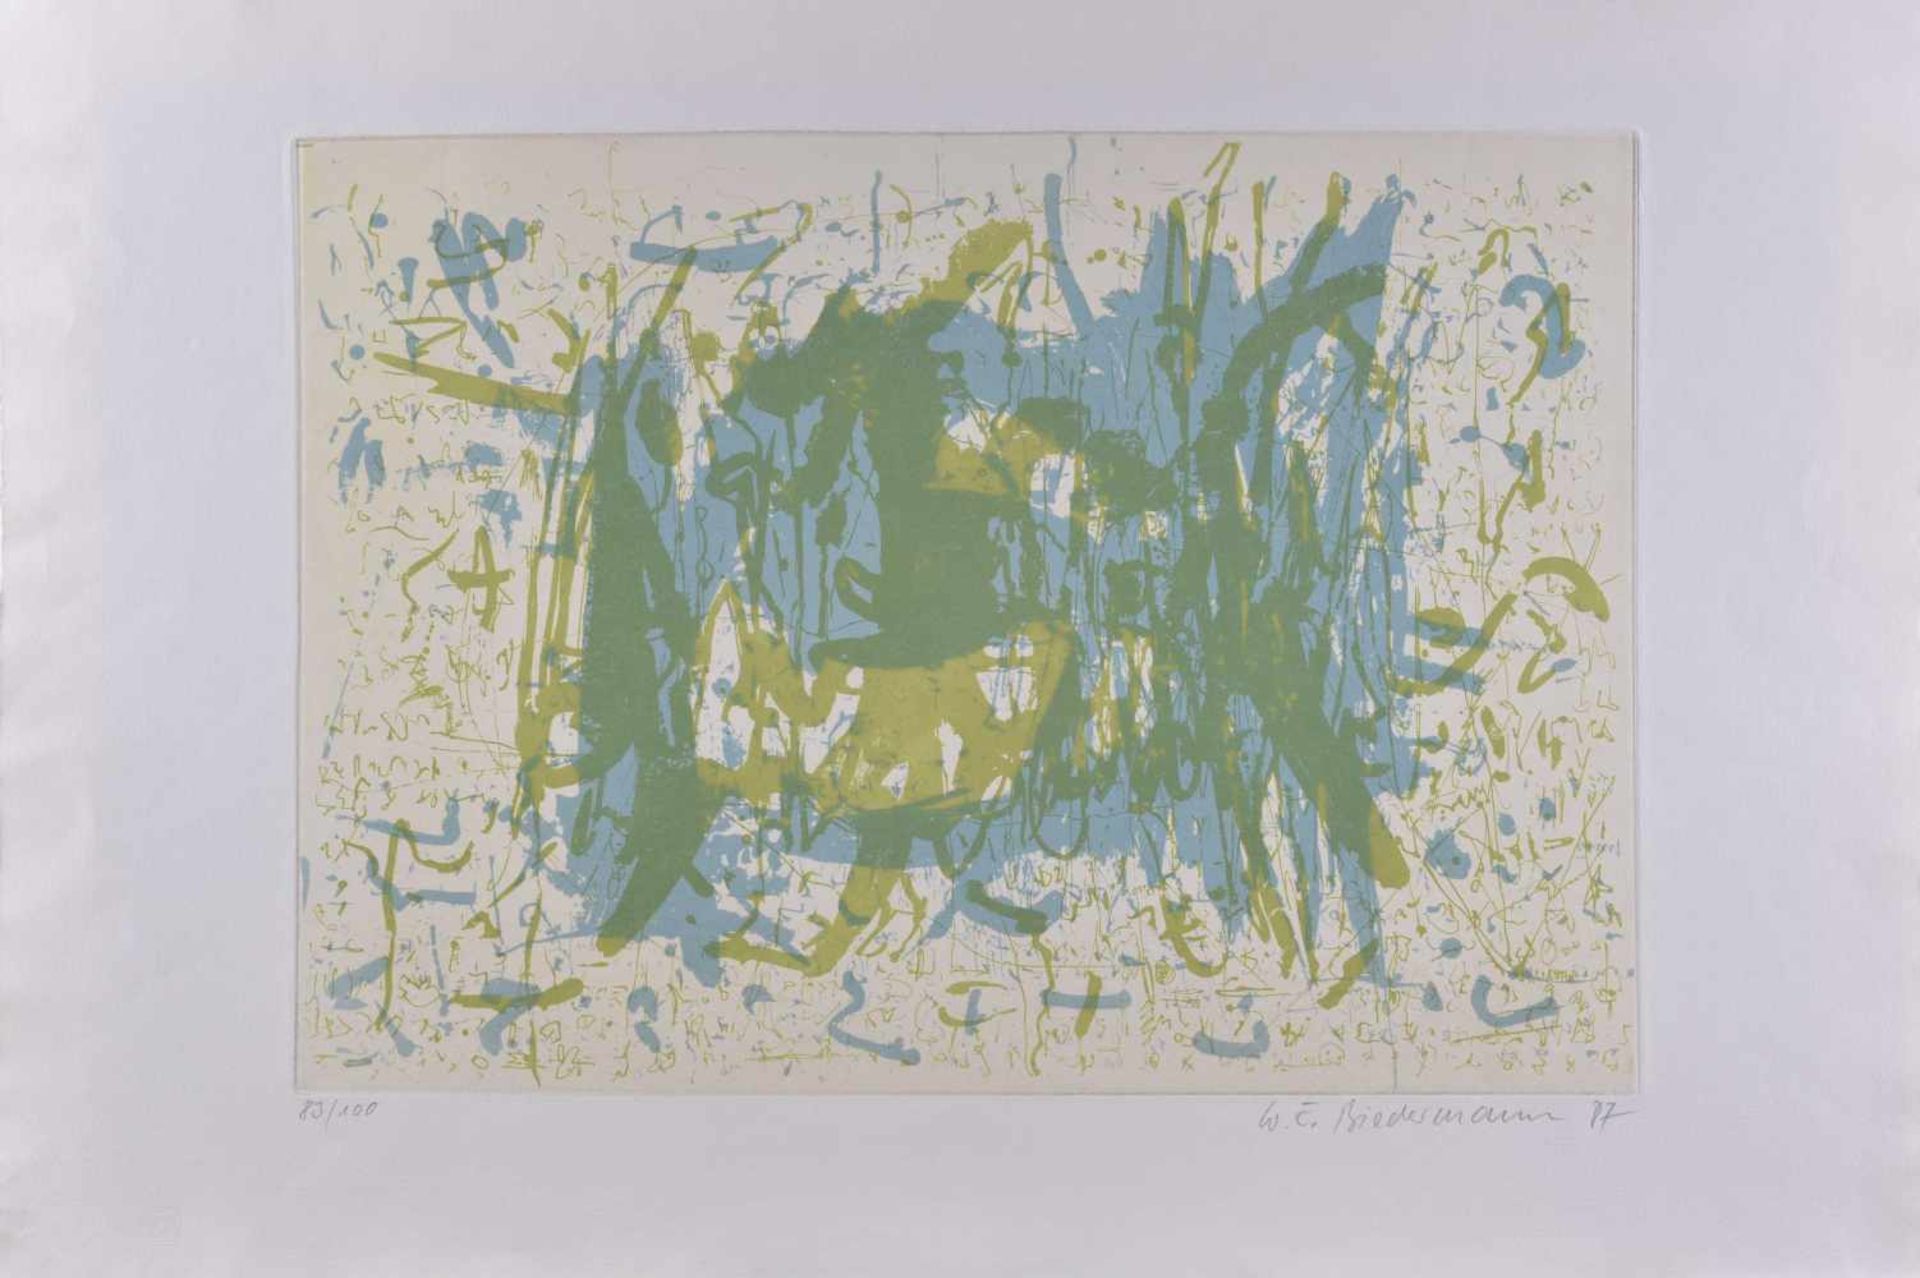 Wolfgang E. BIEDERMANN (1940-2008)"Abstrakte Komposition"Grafik-Farbradierung, Blattgröße 53 cm x 78 - Bild 2 aus 4